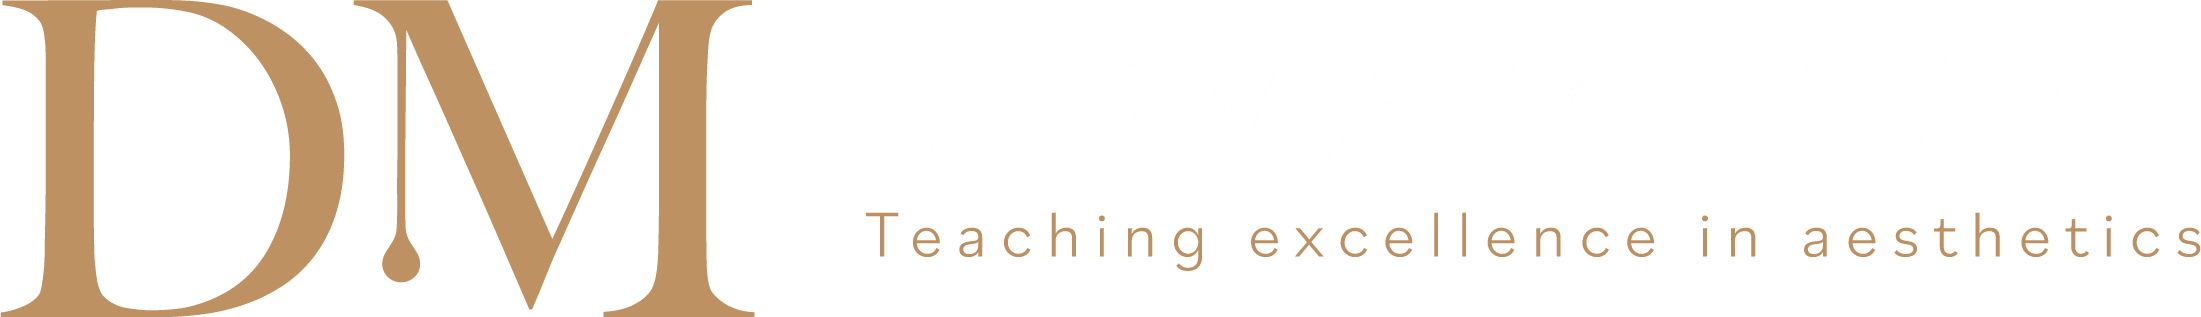 Derma Medical logo